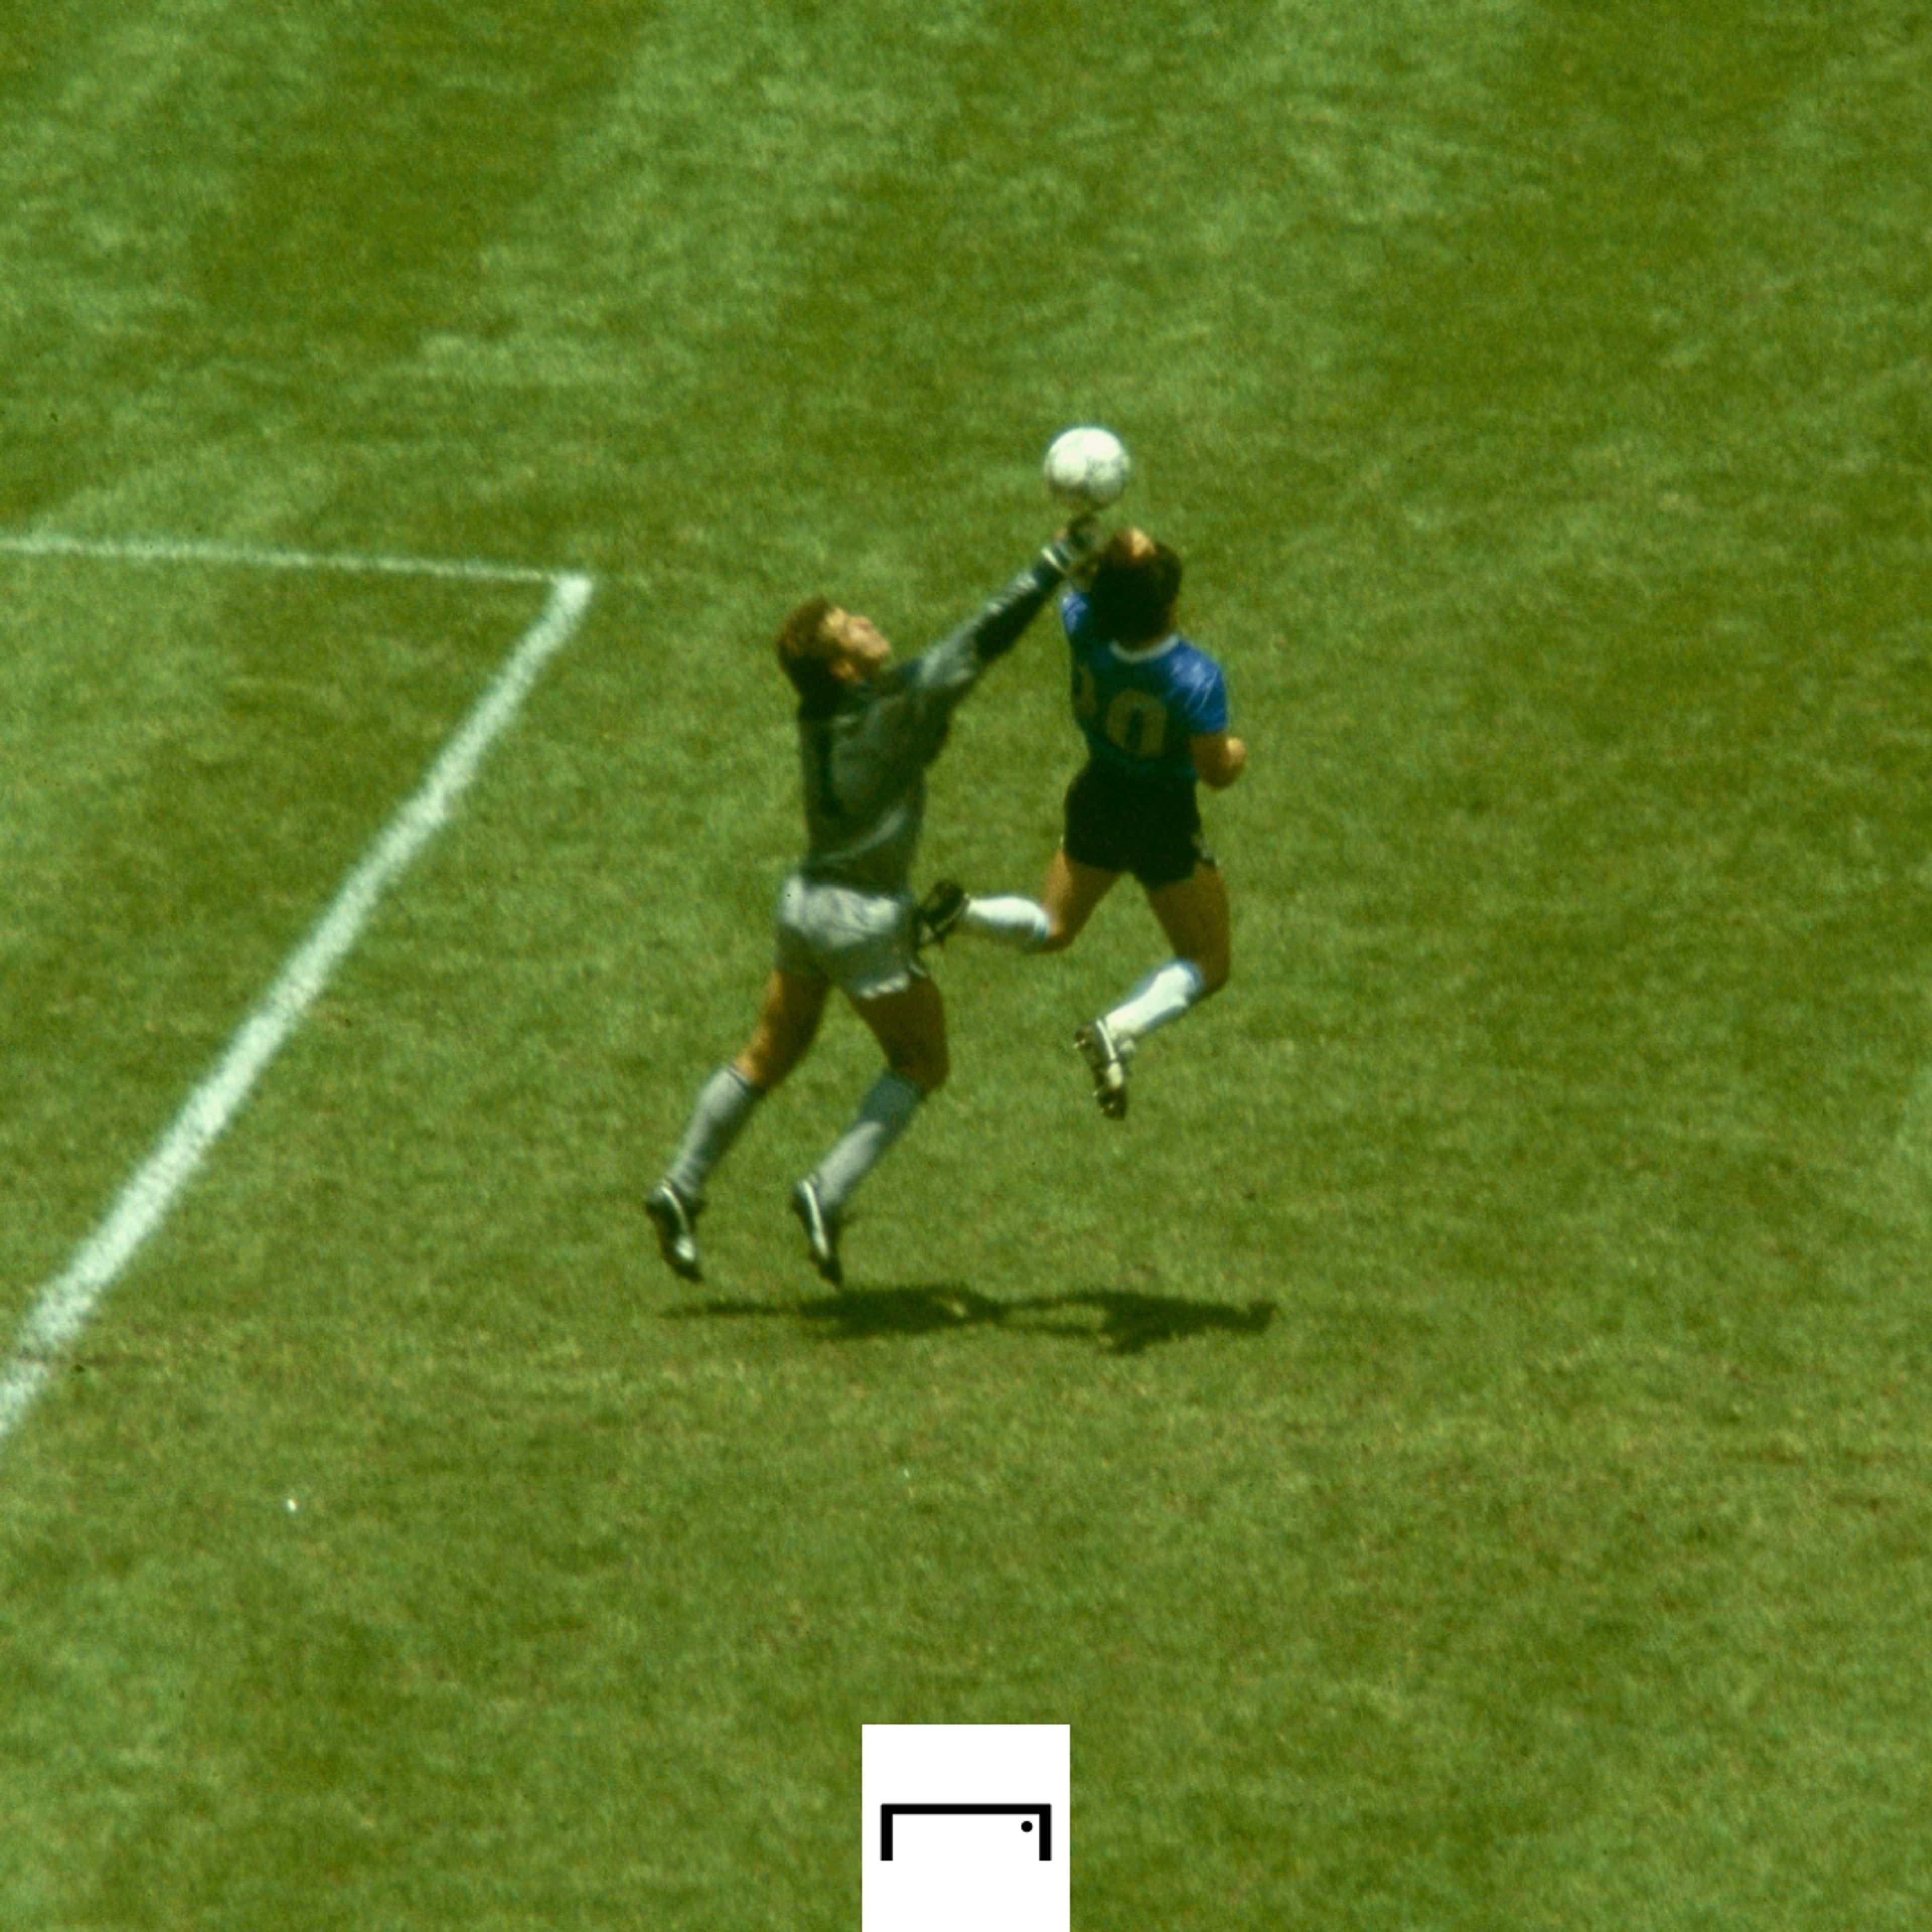 Diego Maradona Hand of God Argentina England 1986 World Cup GFX